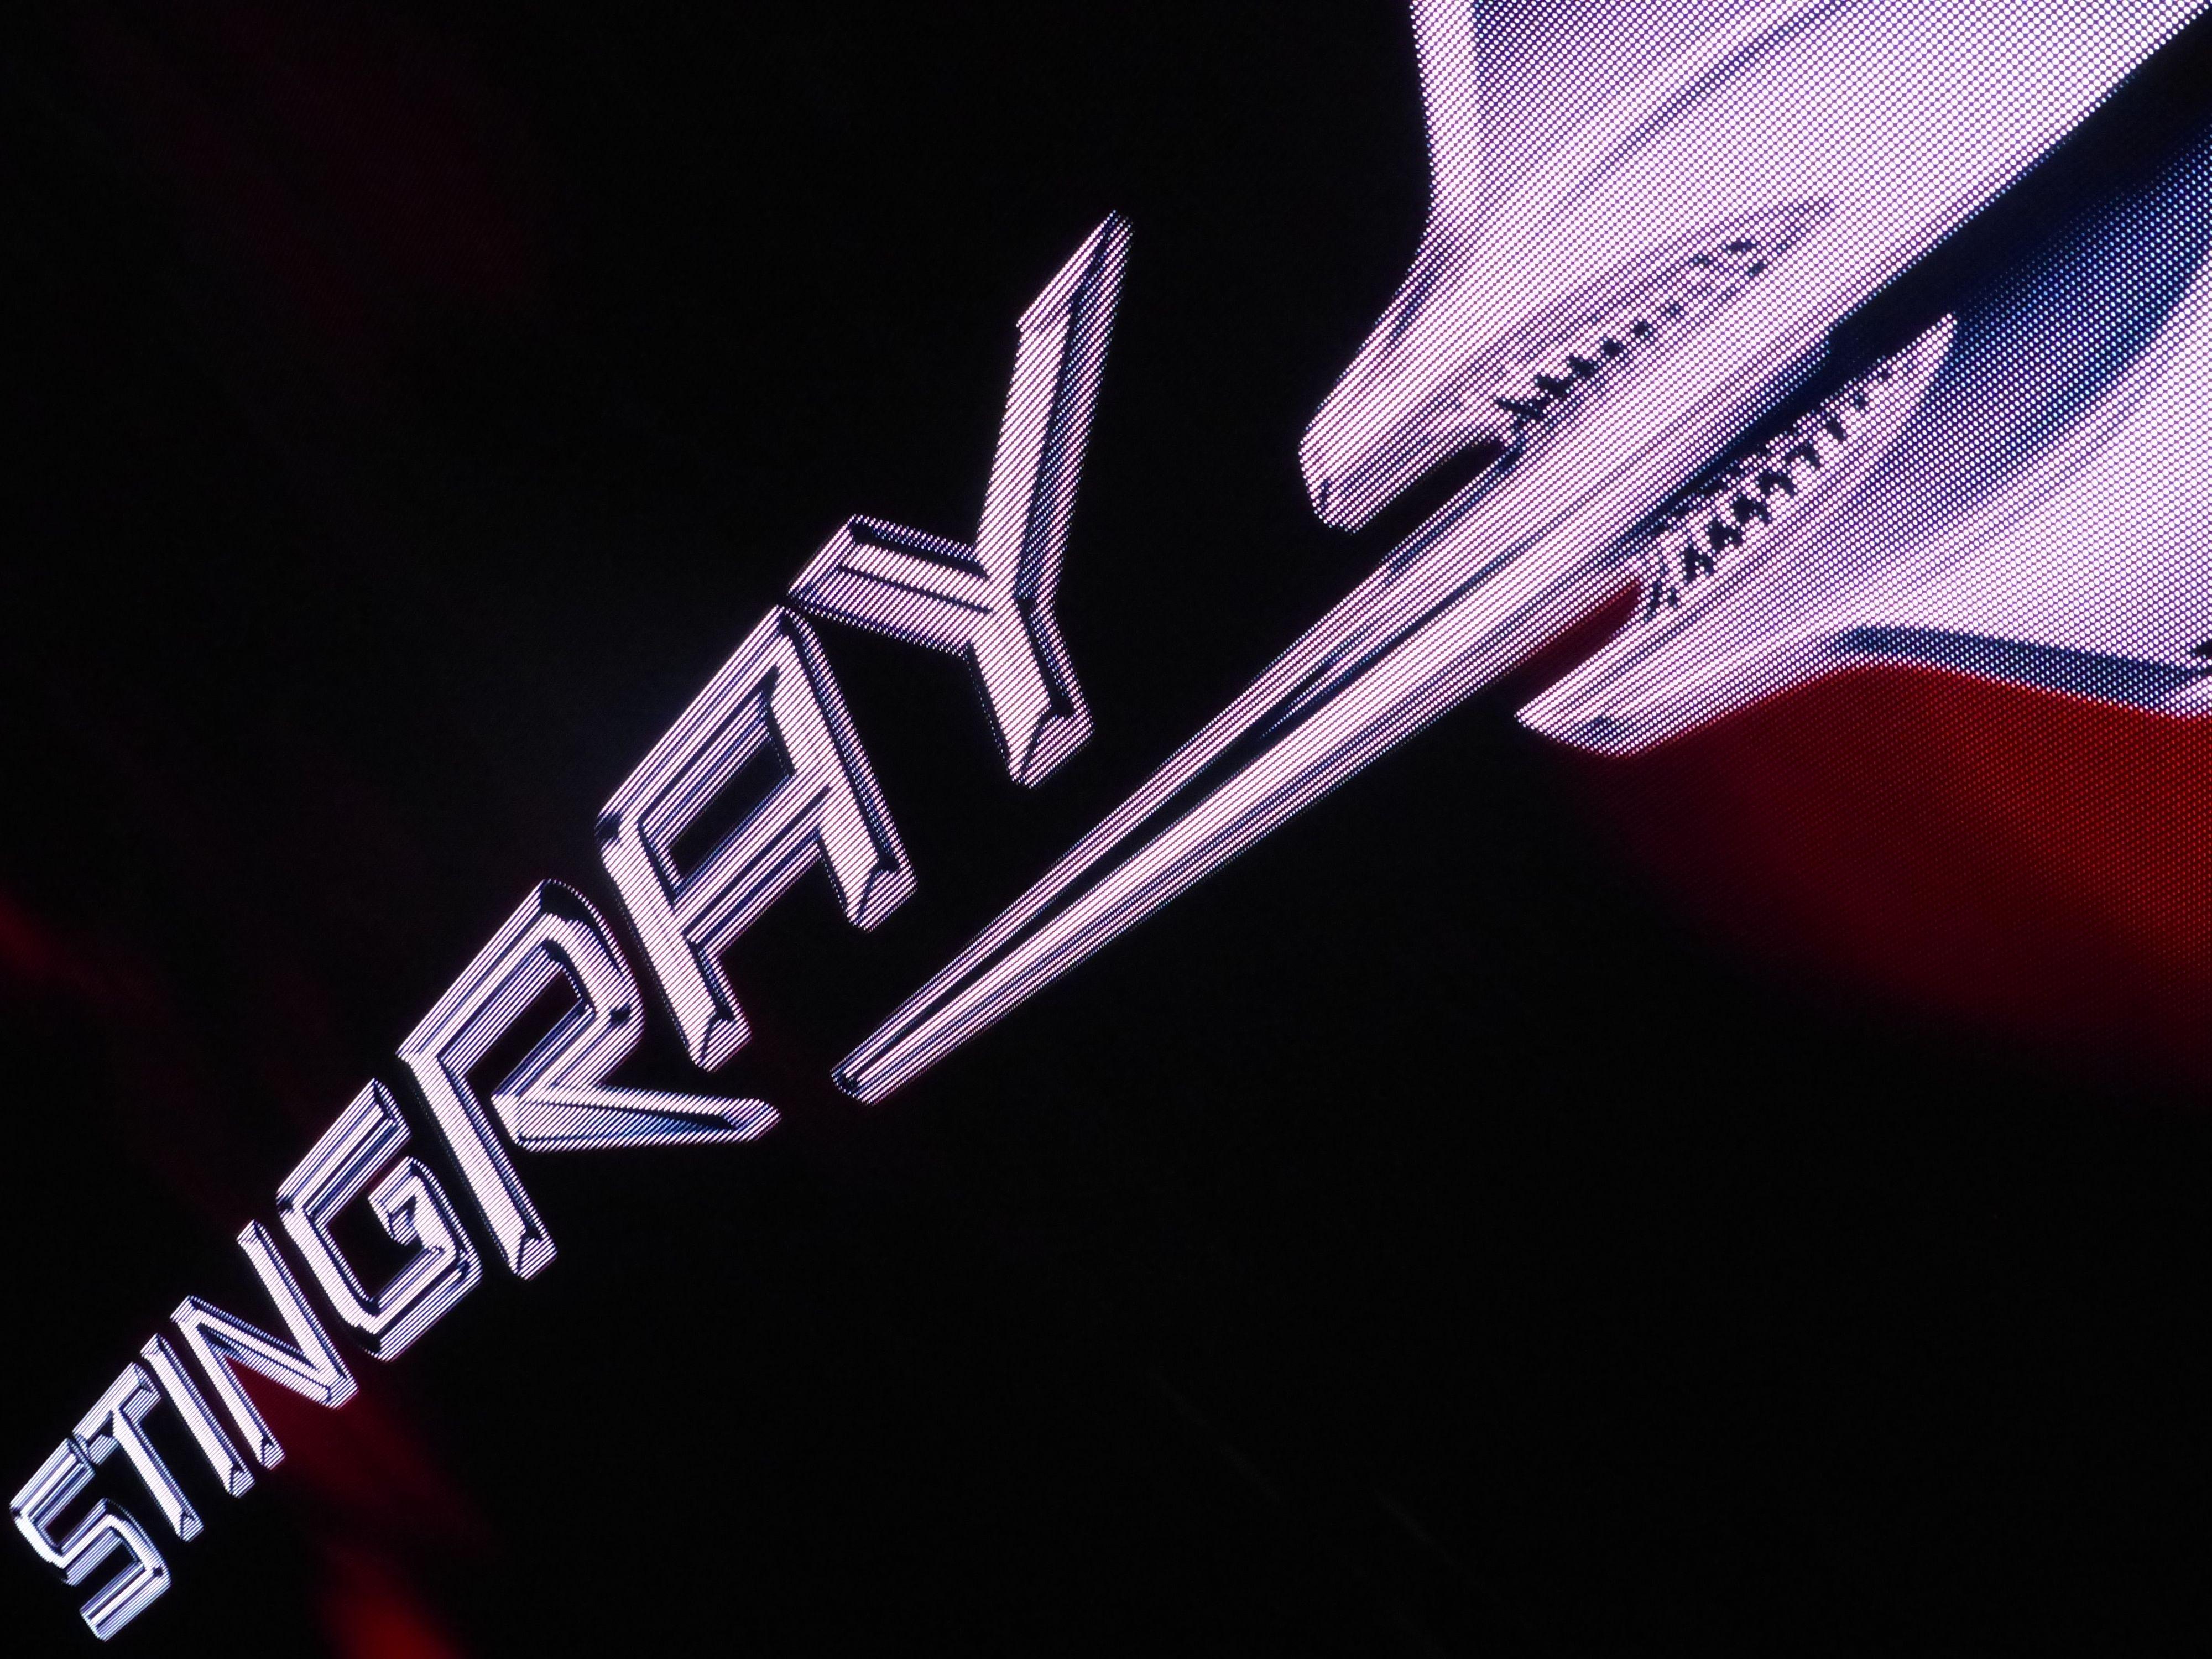 2014 Corvette Stingray Logo - Watch The 2014 Chevrolet C7 Corvette Stingray Detroit Auto Show Debut